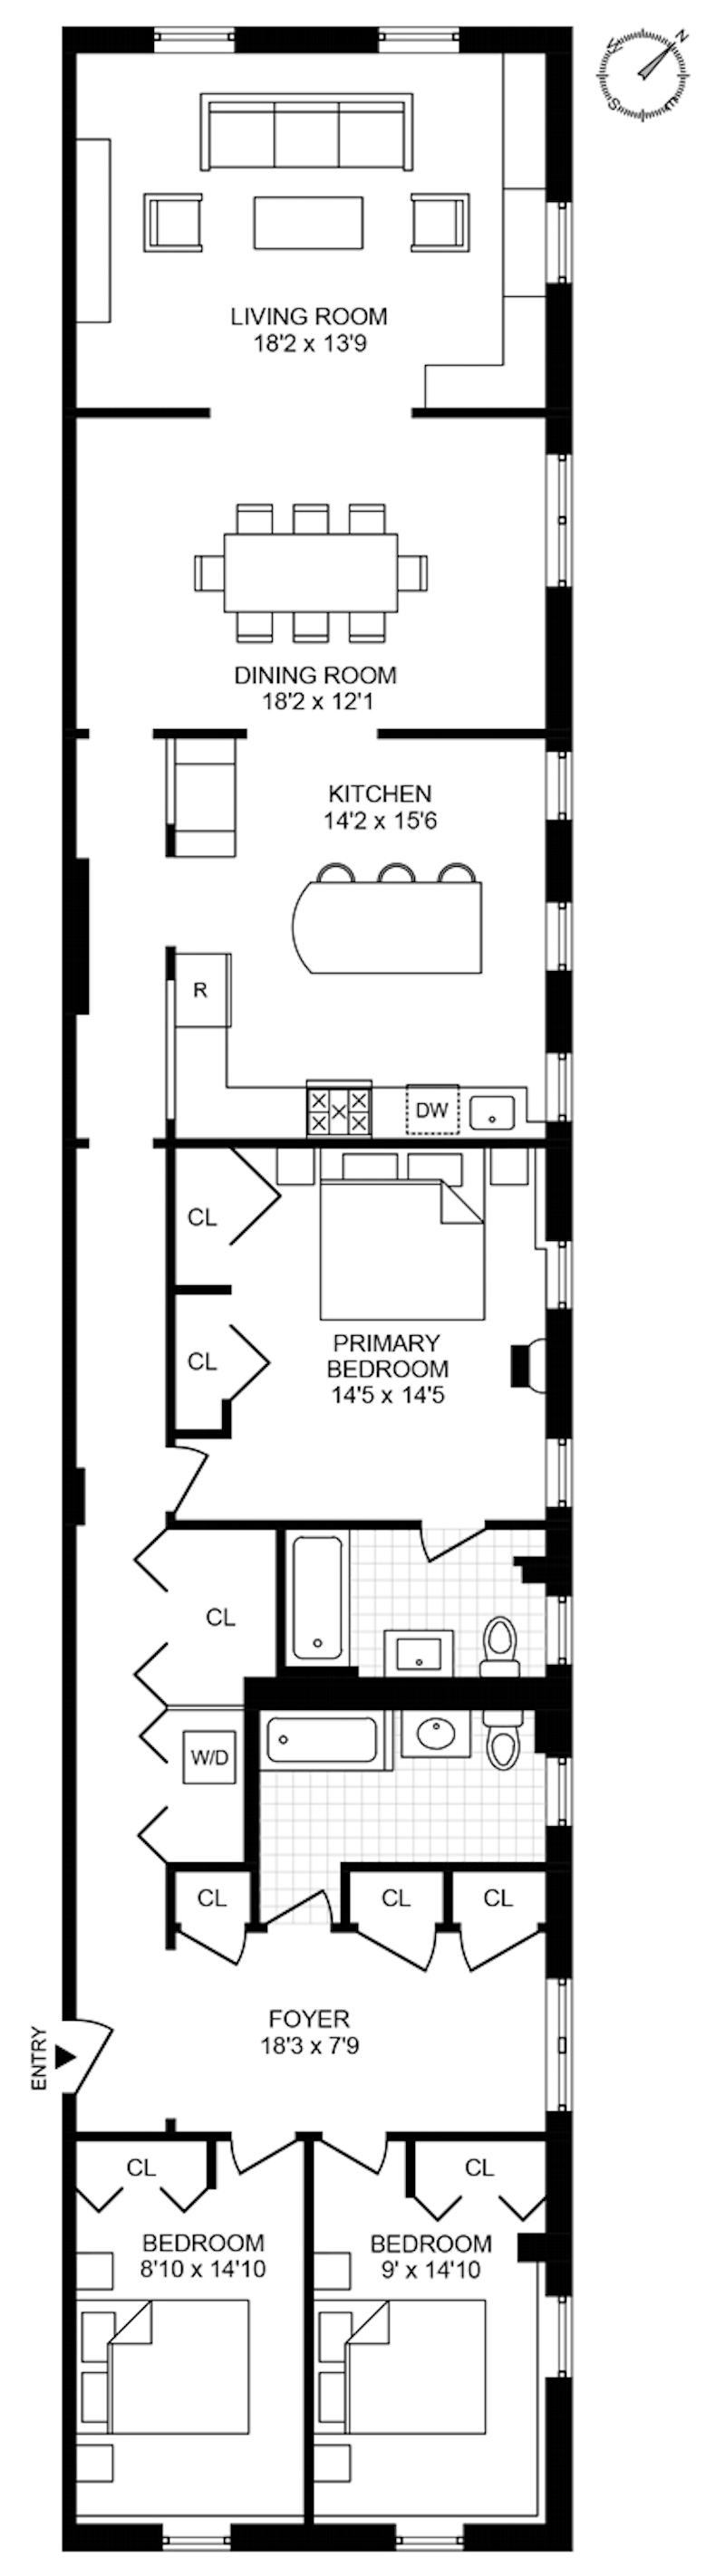 Floorplan for 401 8th Avenue